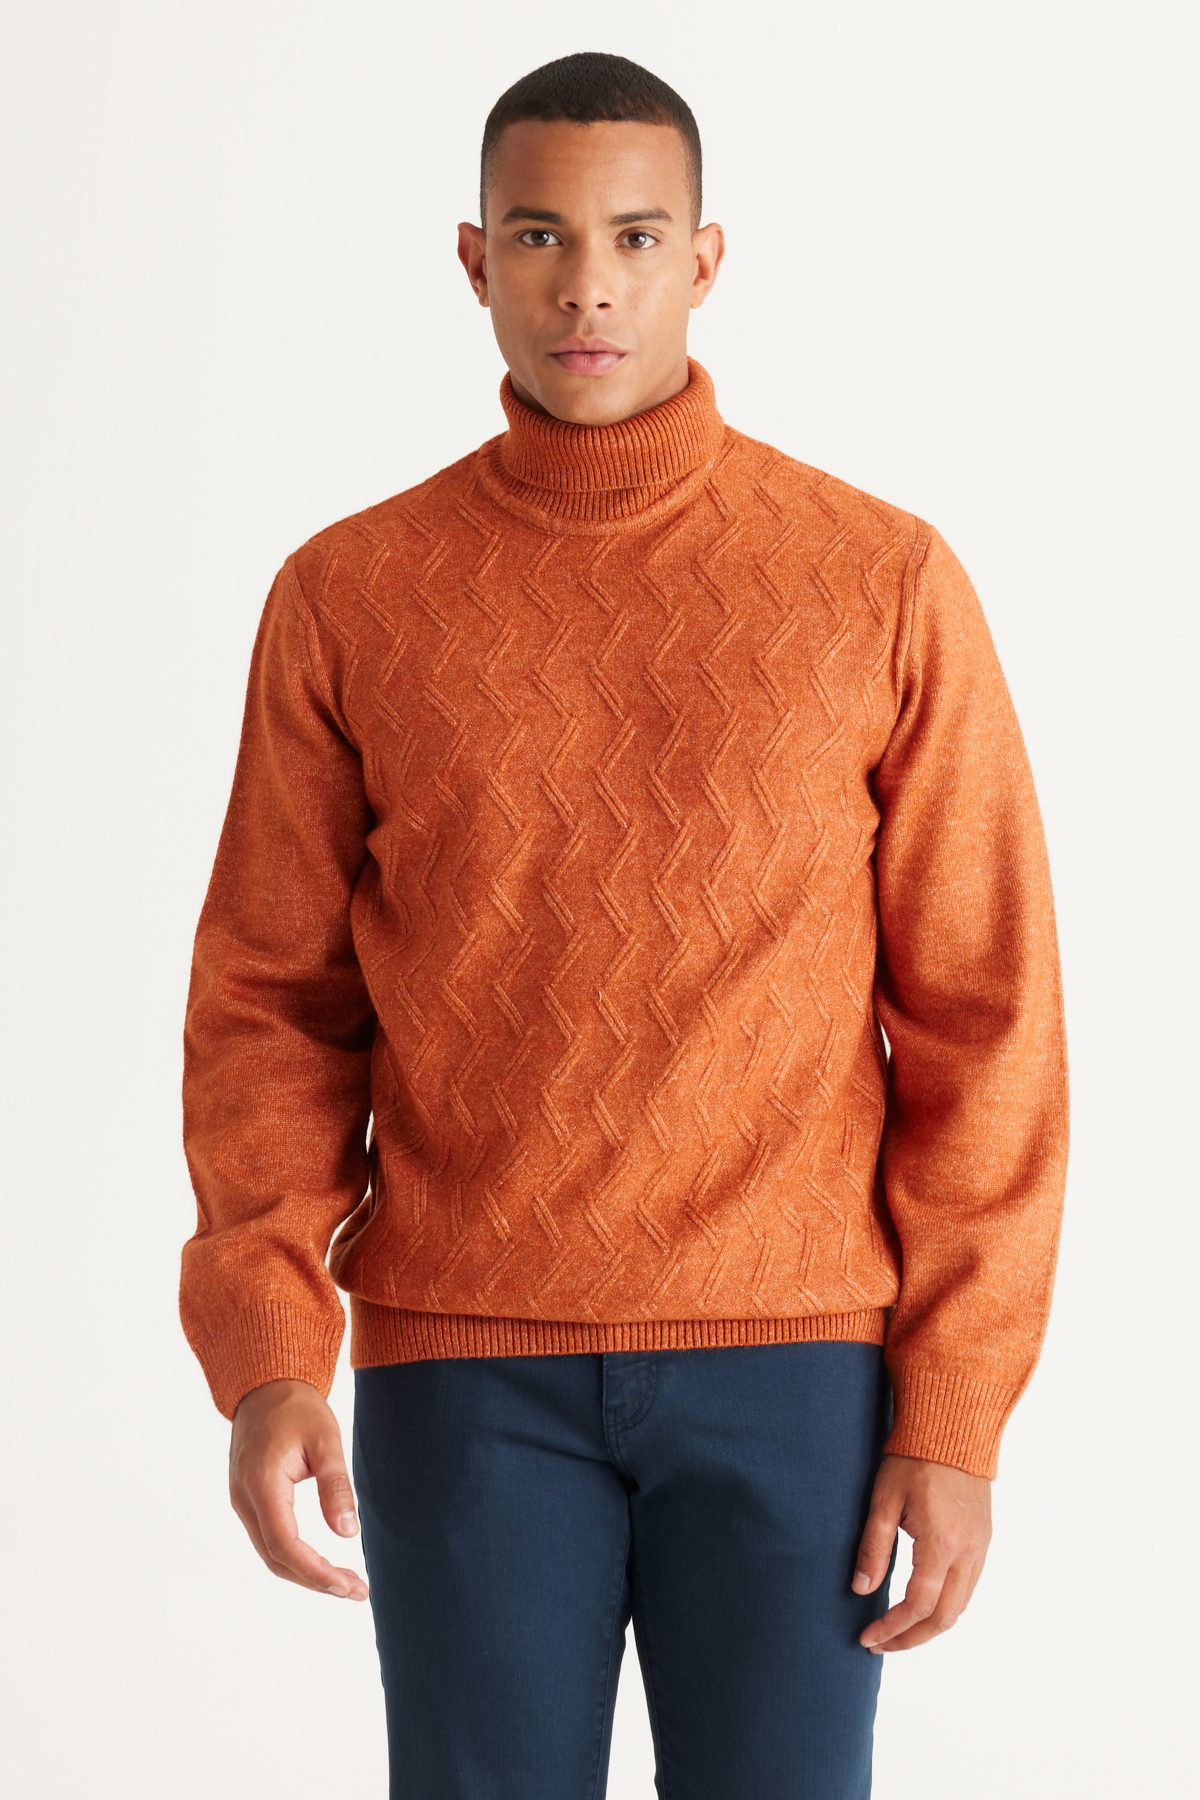 ALTINYILDIZ CLASSICS Men's Tile Standard Fit Normal Cut Full Turtleneck Raised Soft Textured Knitwear Sweater